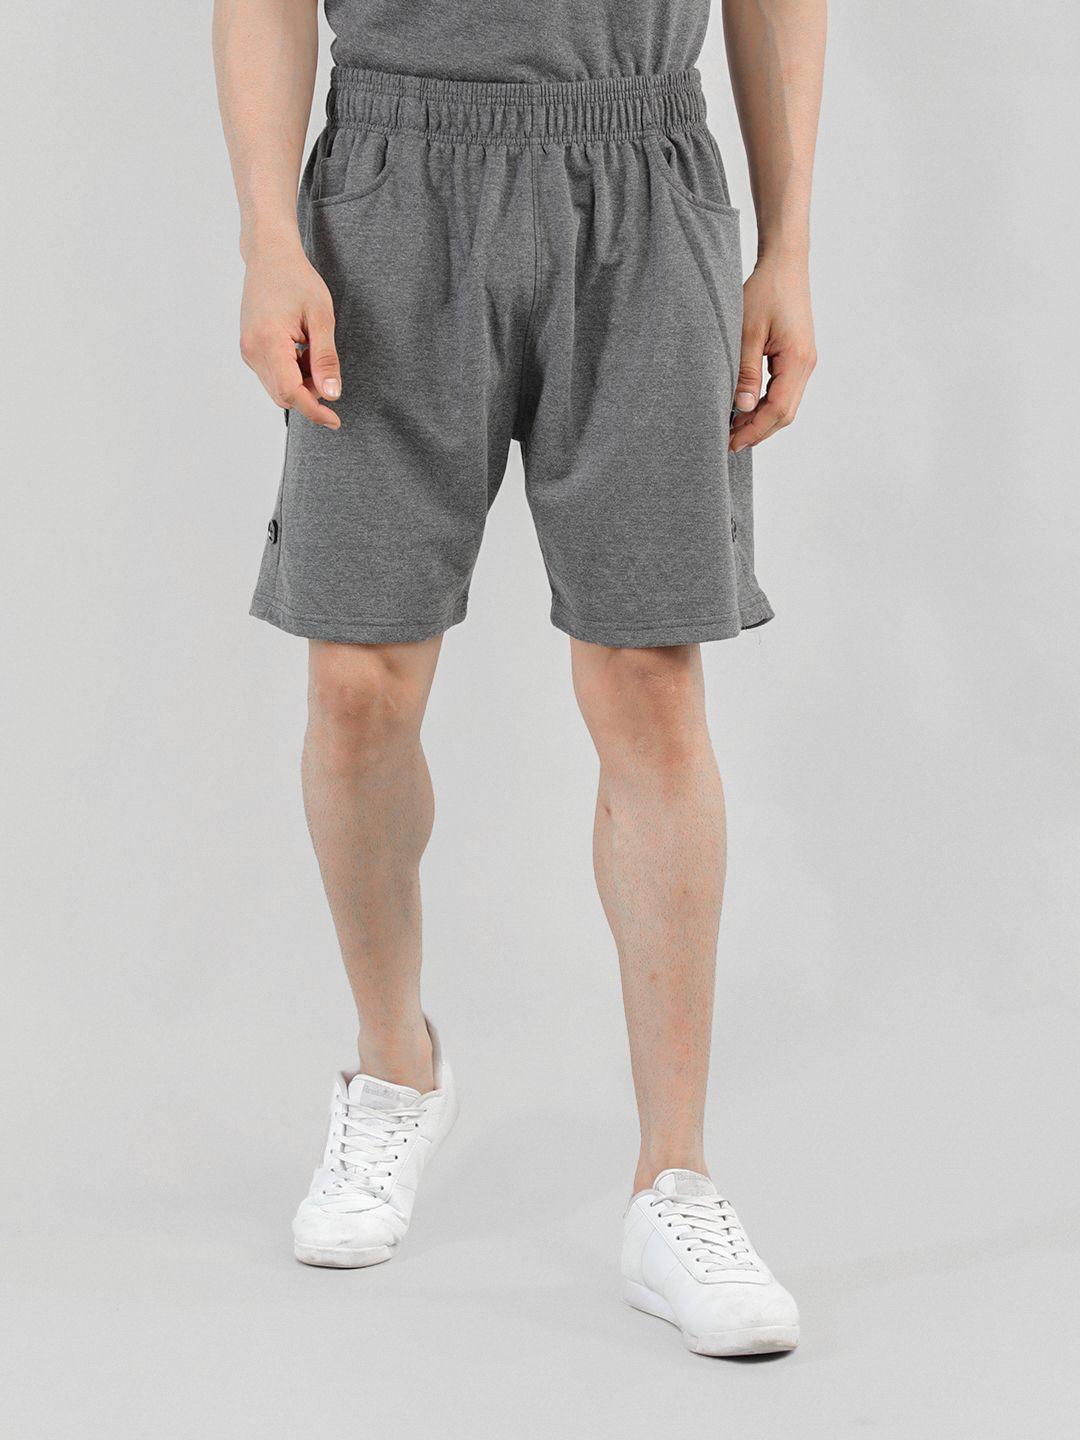 chkokko men grey outdoor shorts